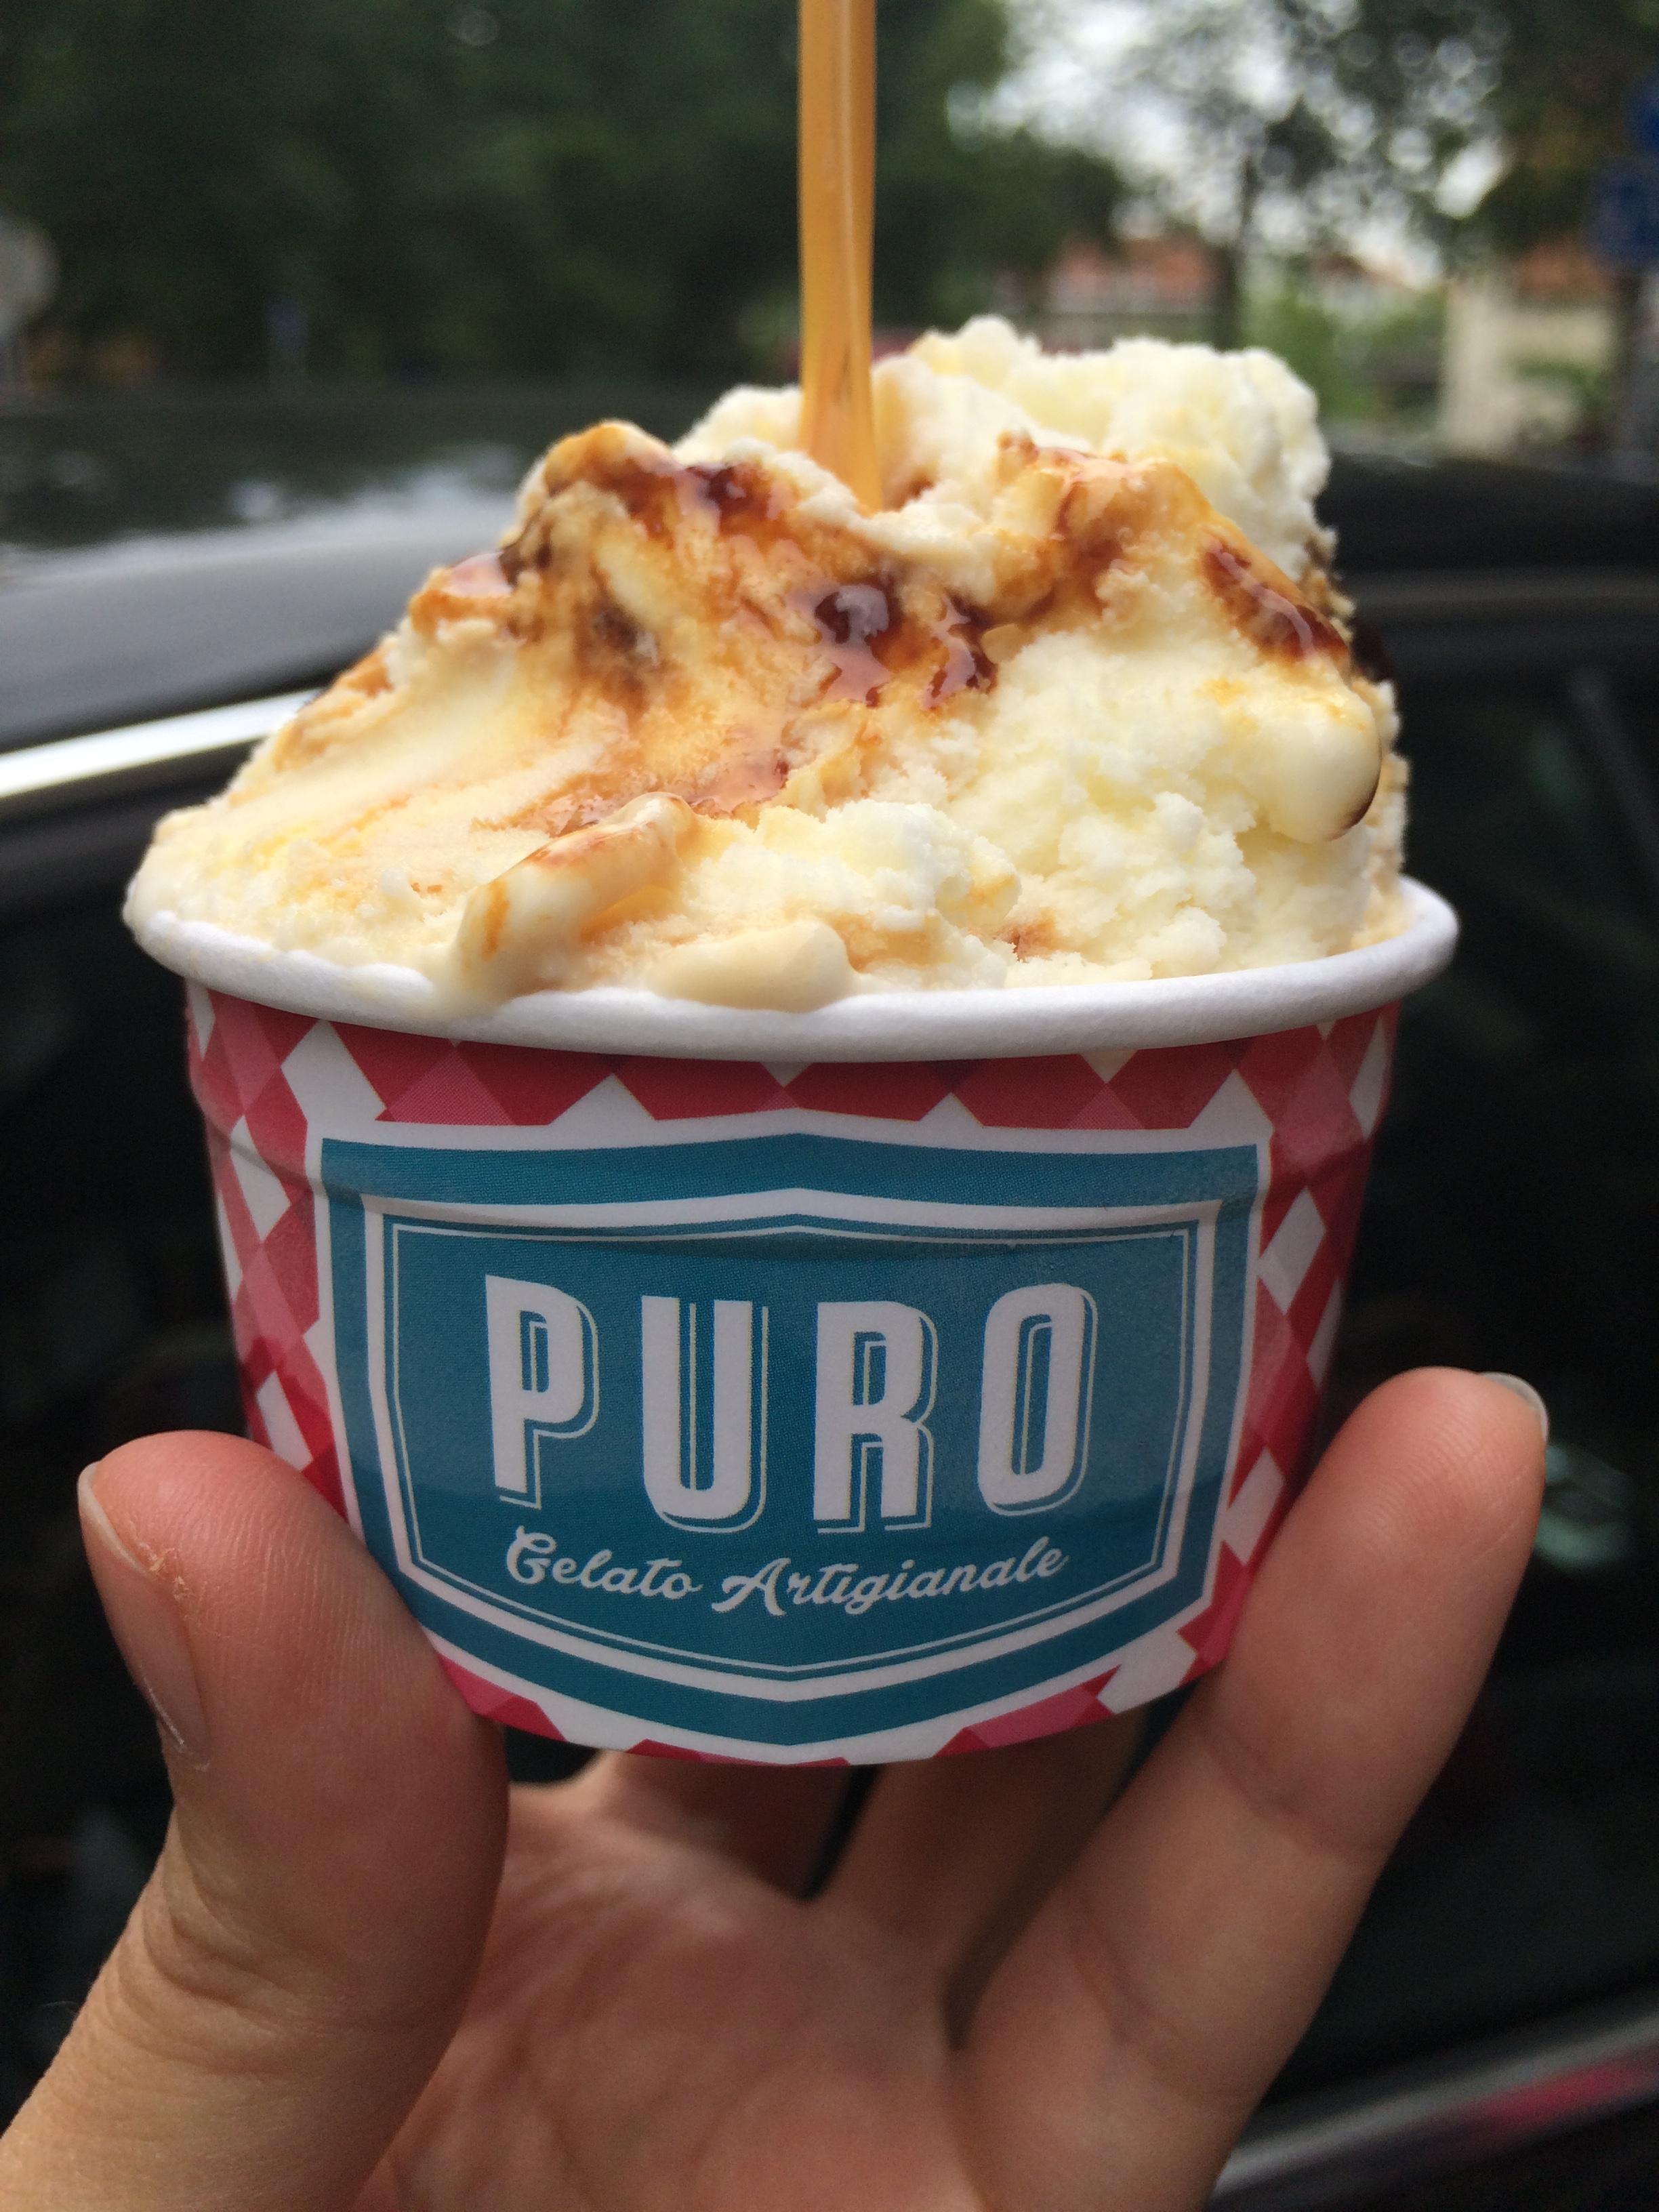 Cover image of this place PURO ice cream